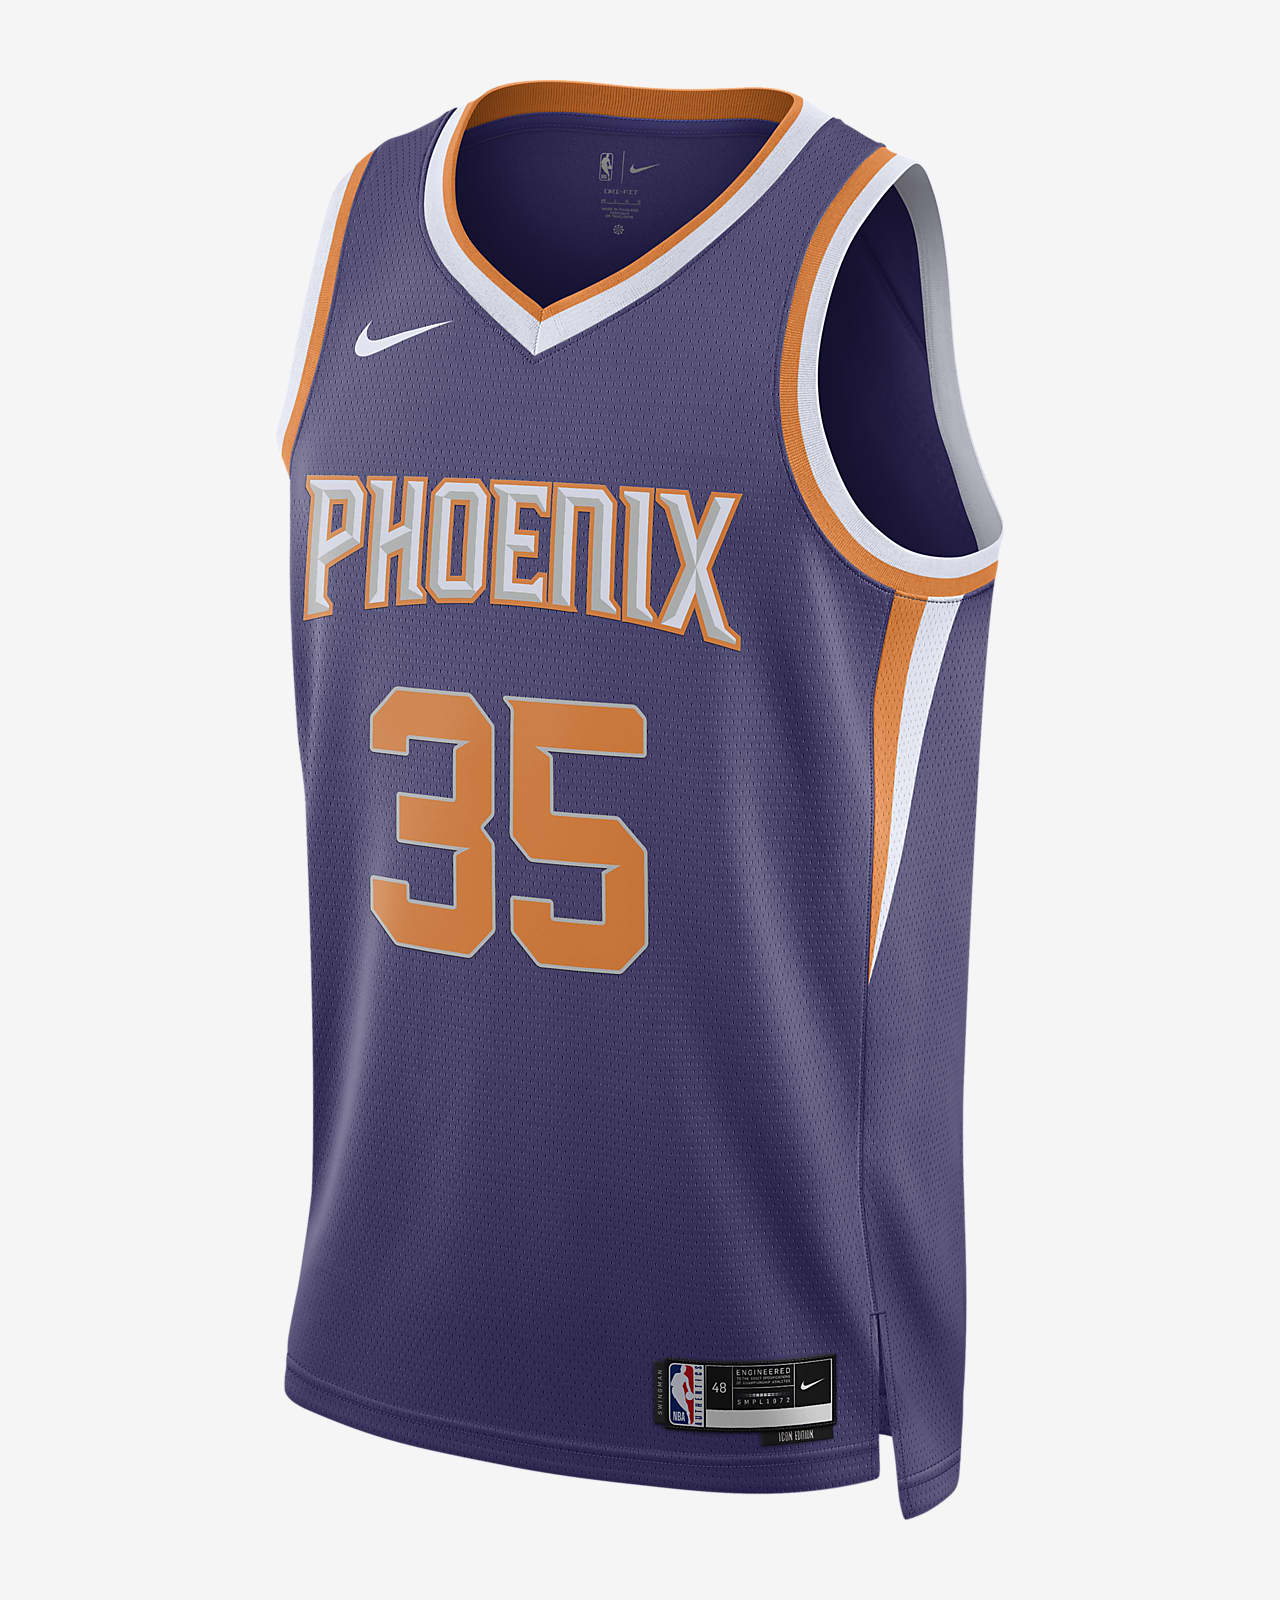 phoenix suns new uniform